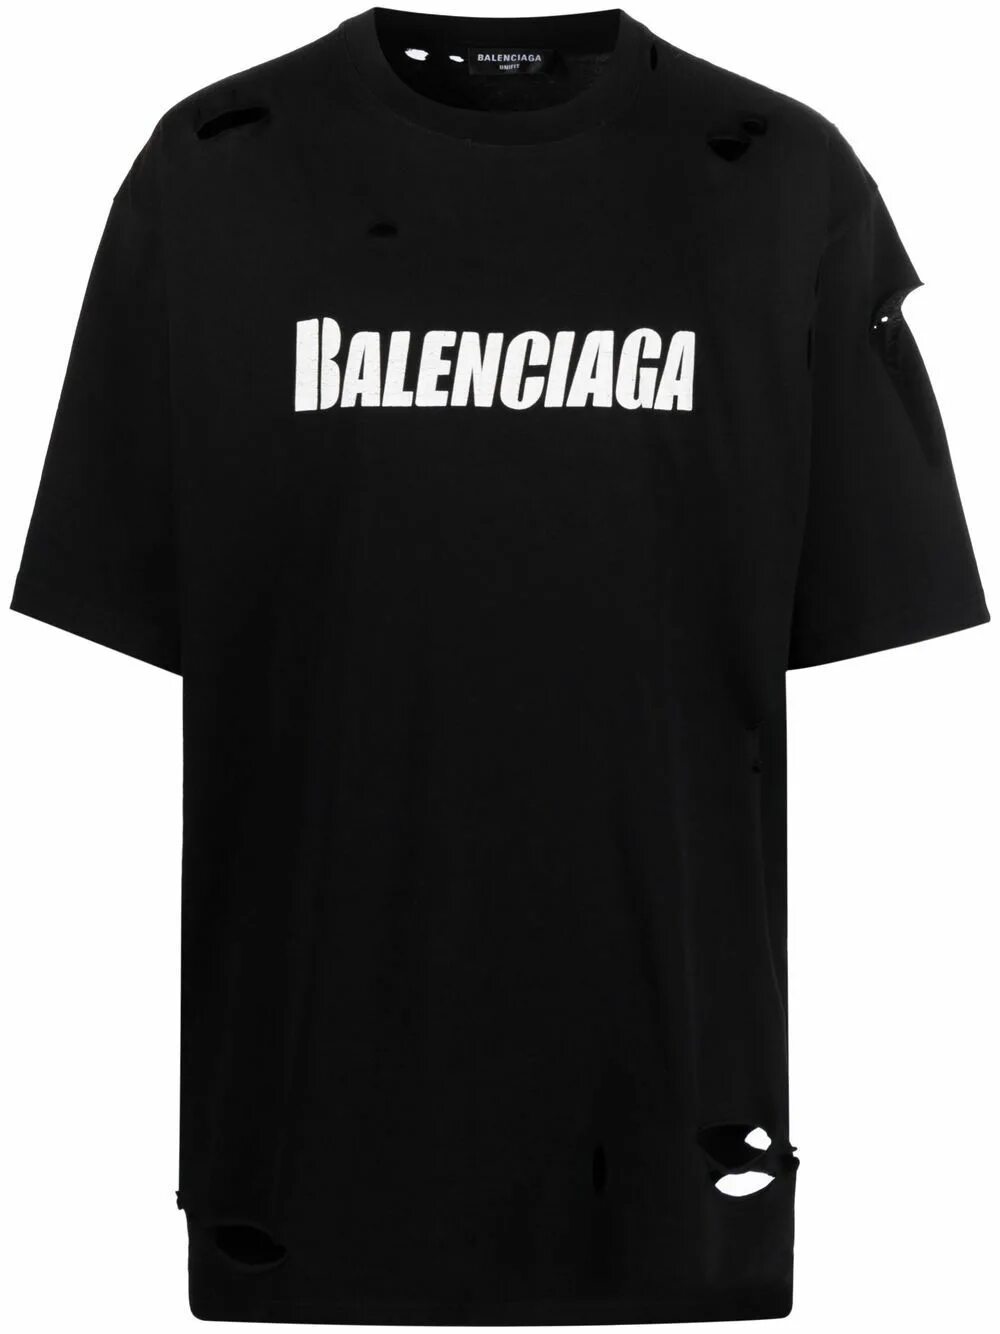 Черная футболка Баленсиага. Майка боленси. Balenciaga футболка. Balenciaga футболка черная.